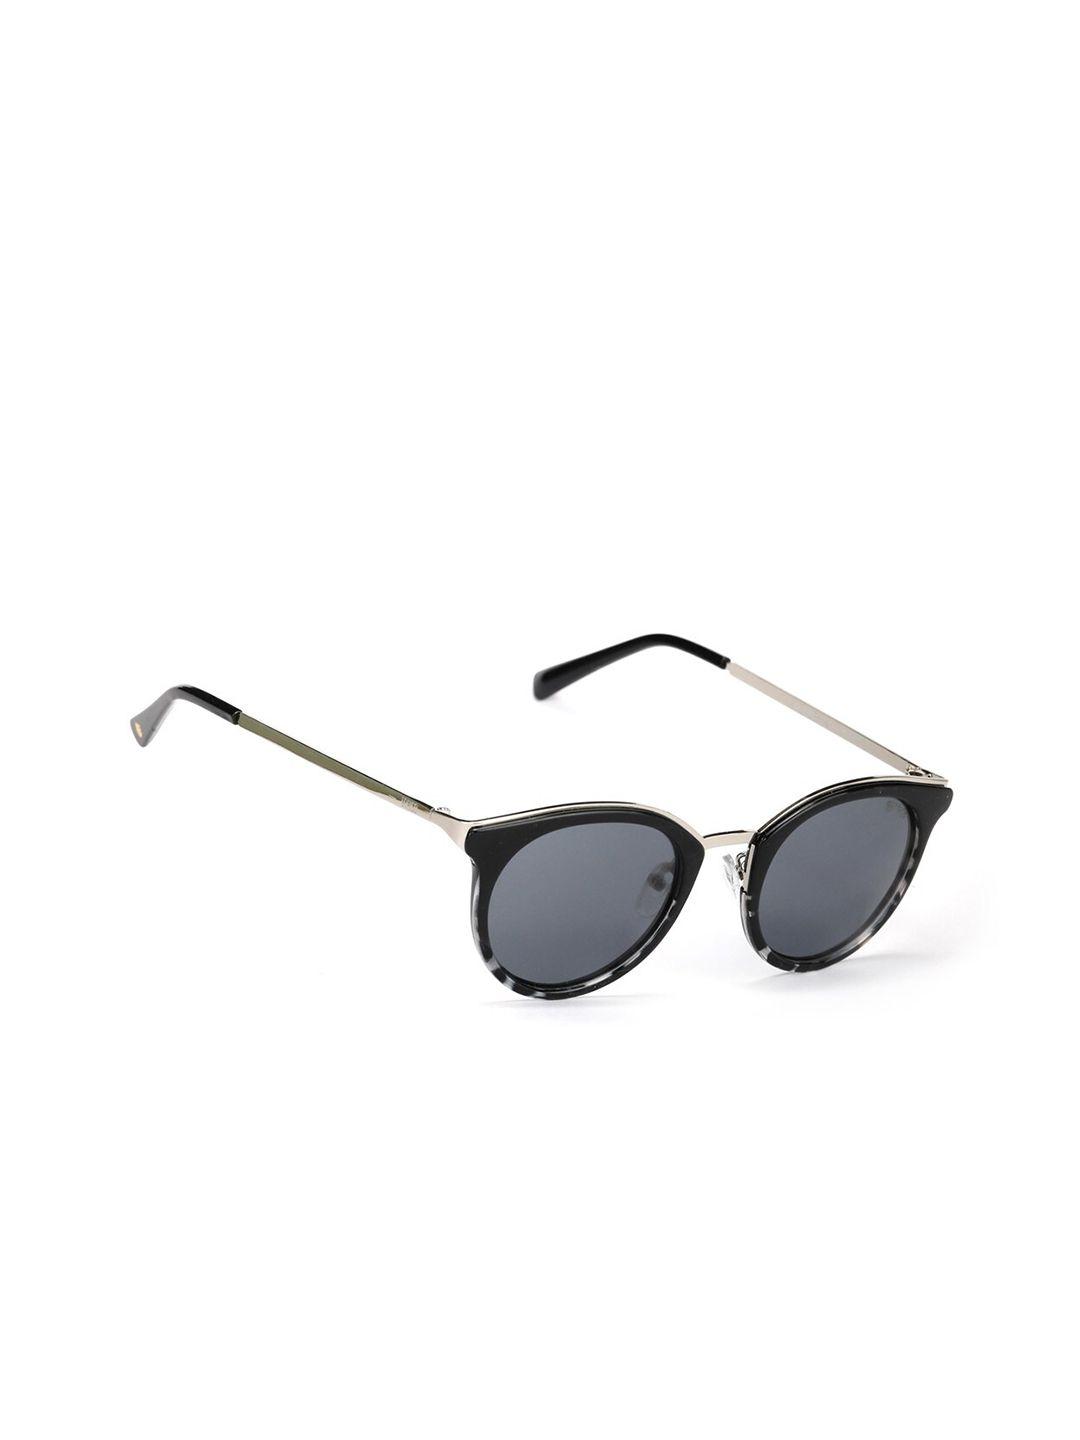 enrico women blue lens & black aviator sunglasses - en e 3017 c1-blue